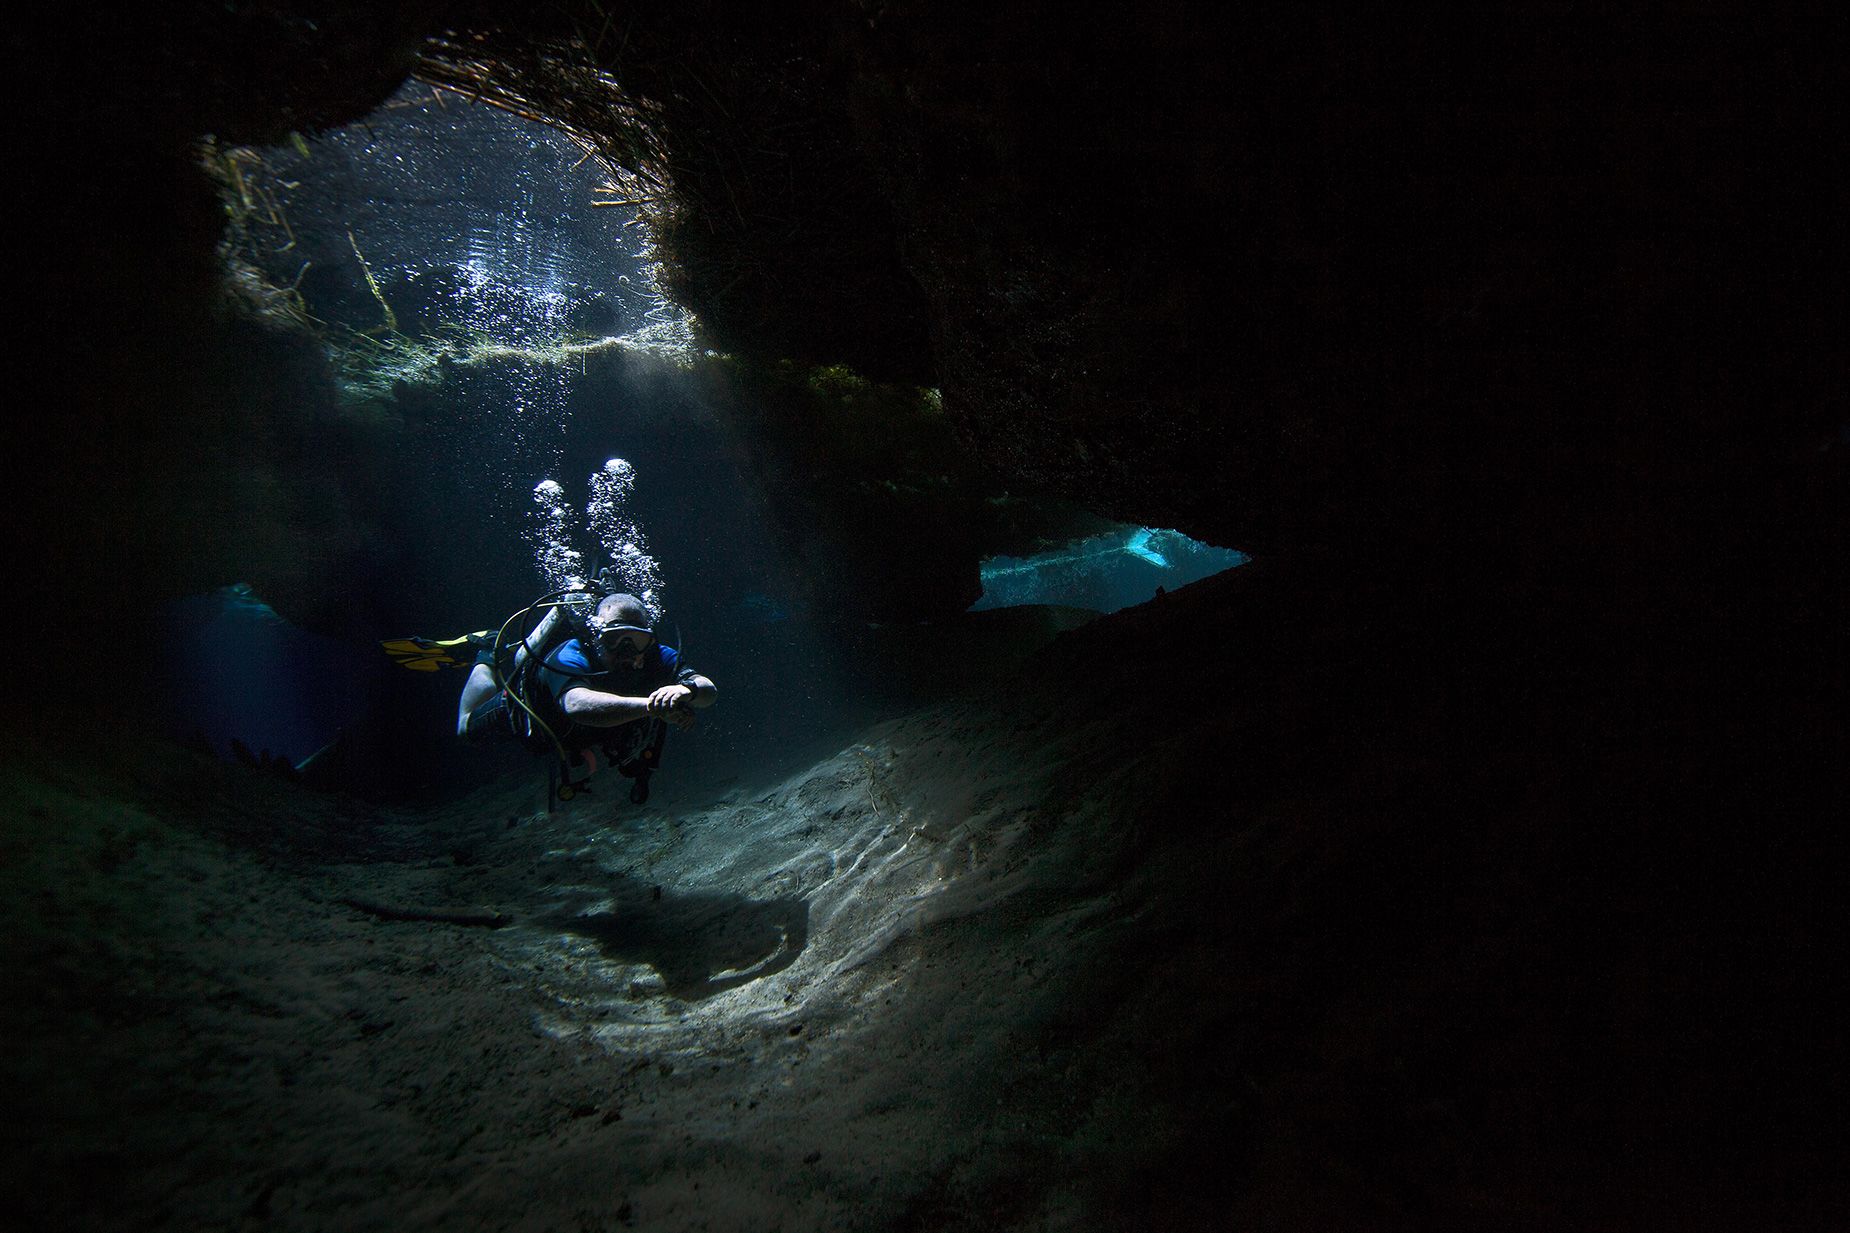 Divers can explore the underwater cave in Media Luna lagoon near Rioverde.